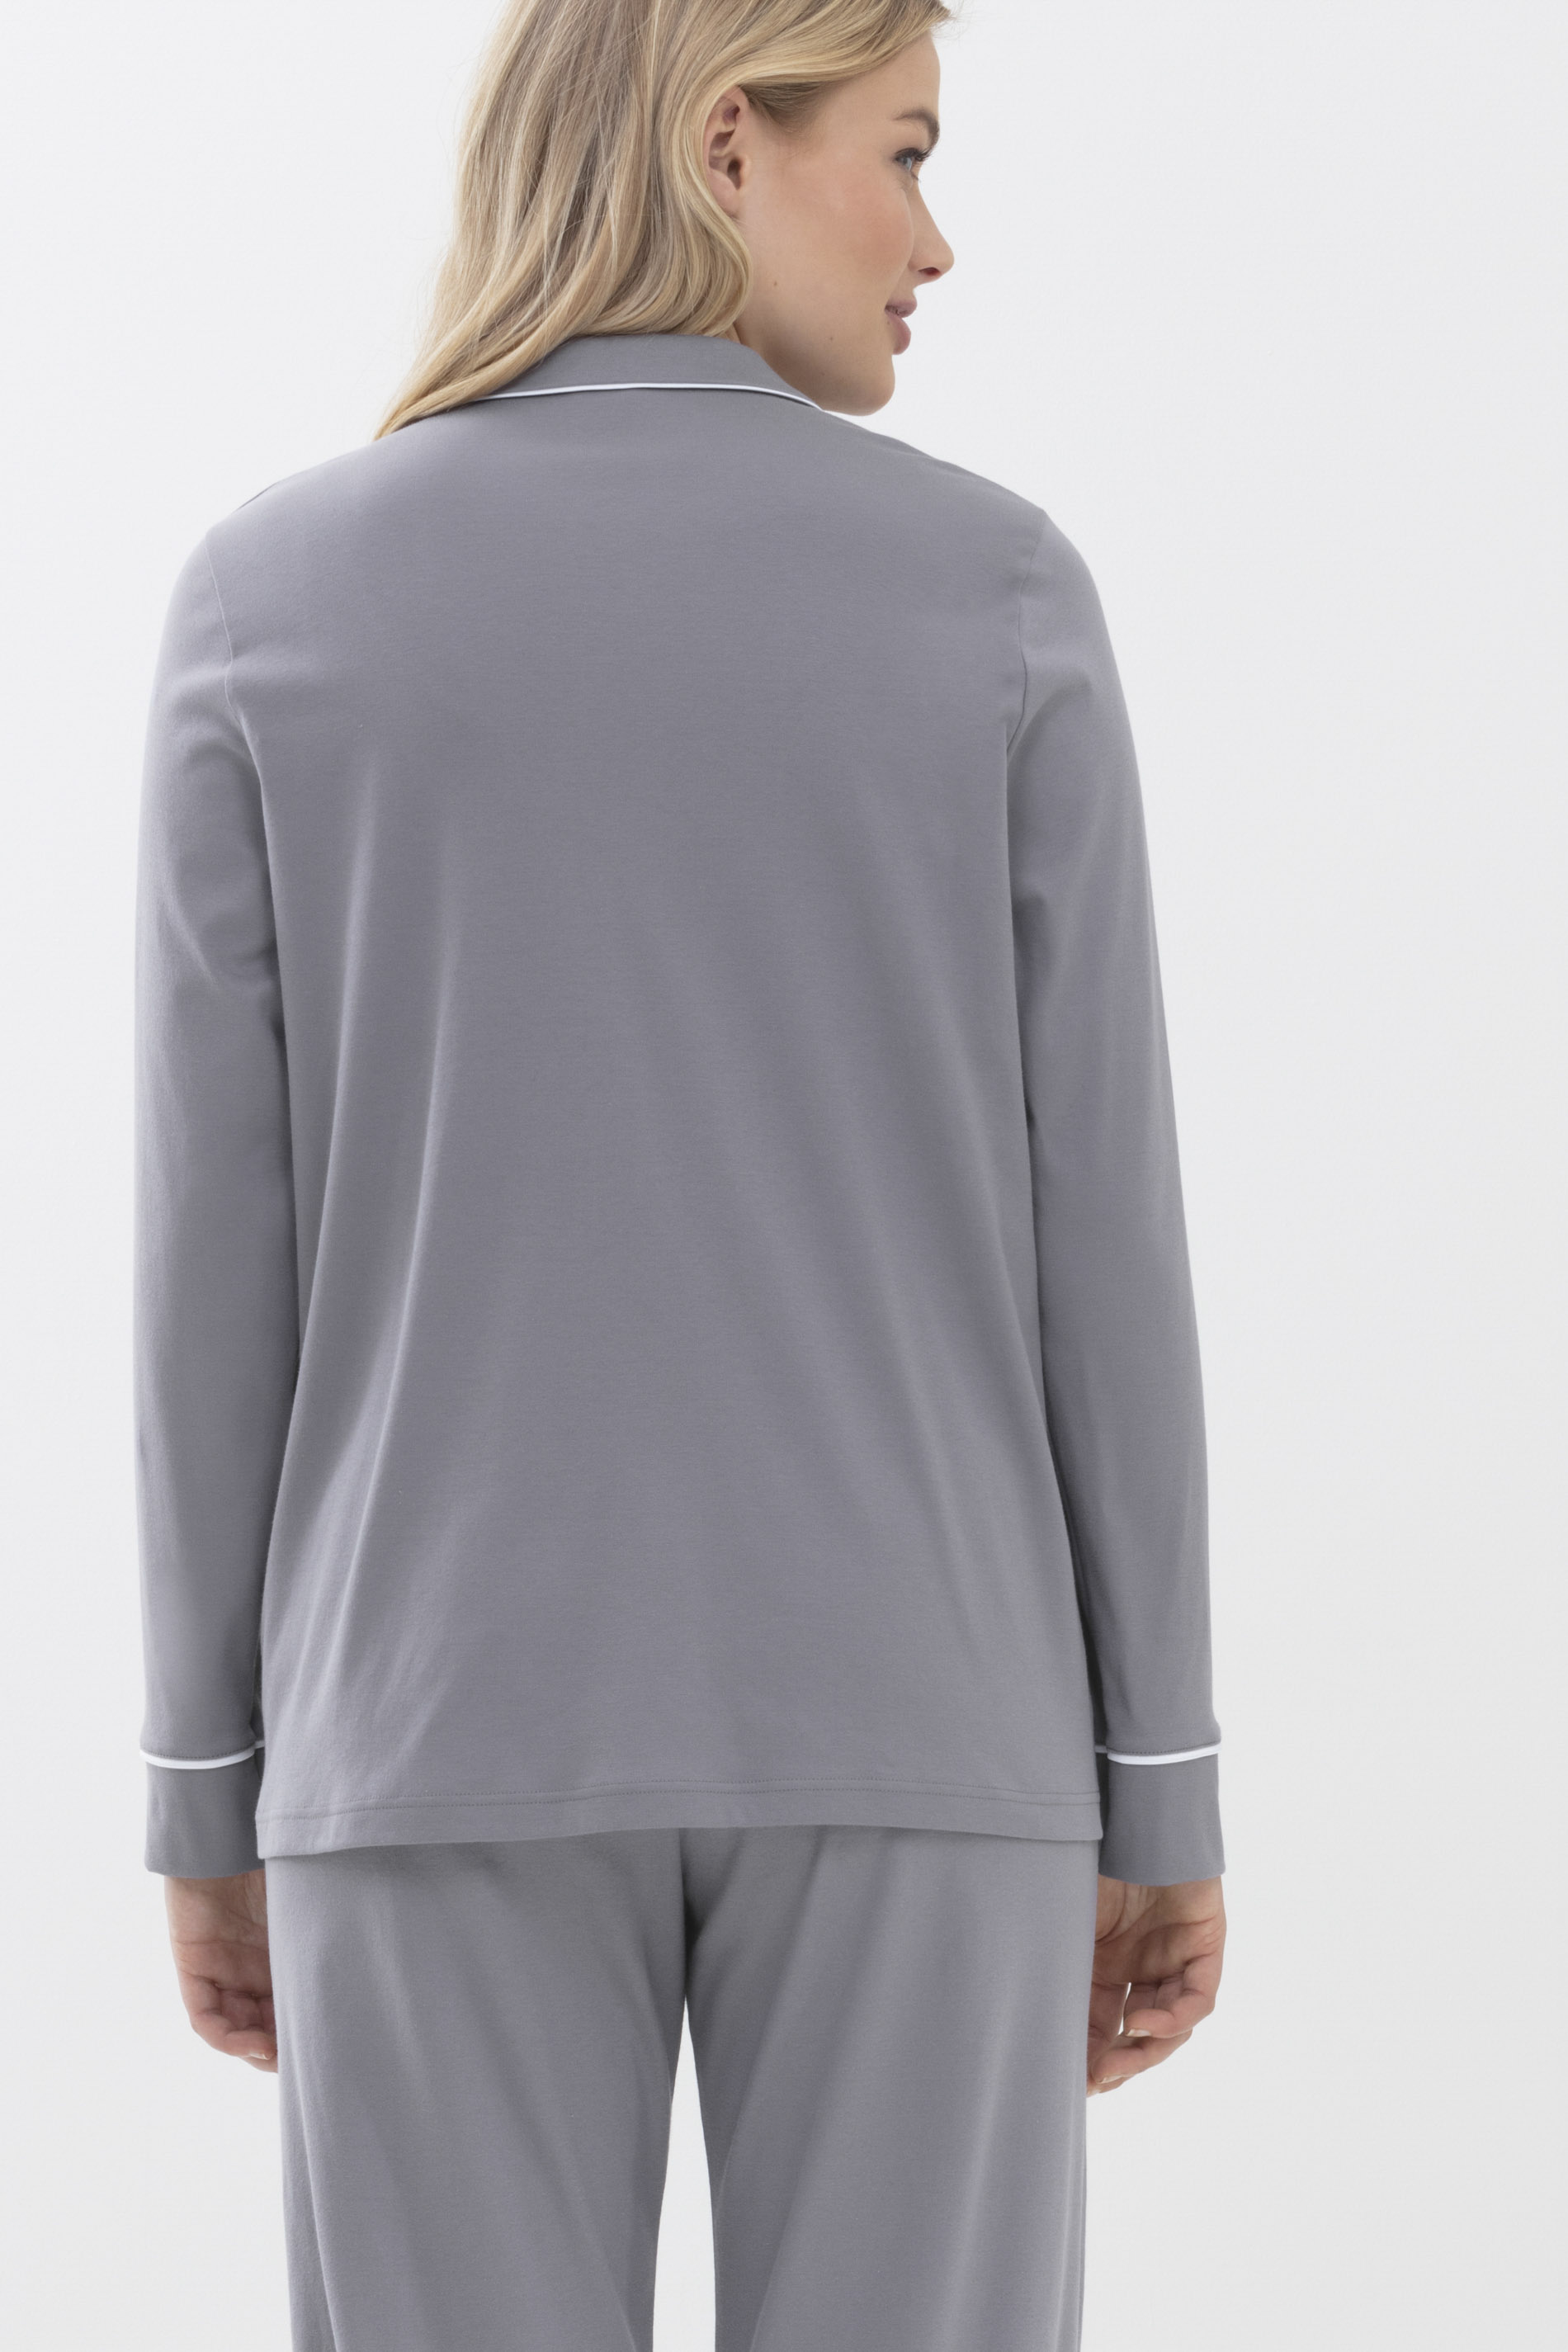 Pyjama shirt Lovely Grey Serie Sleepsation Rear View | mey®